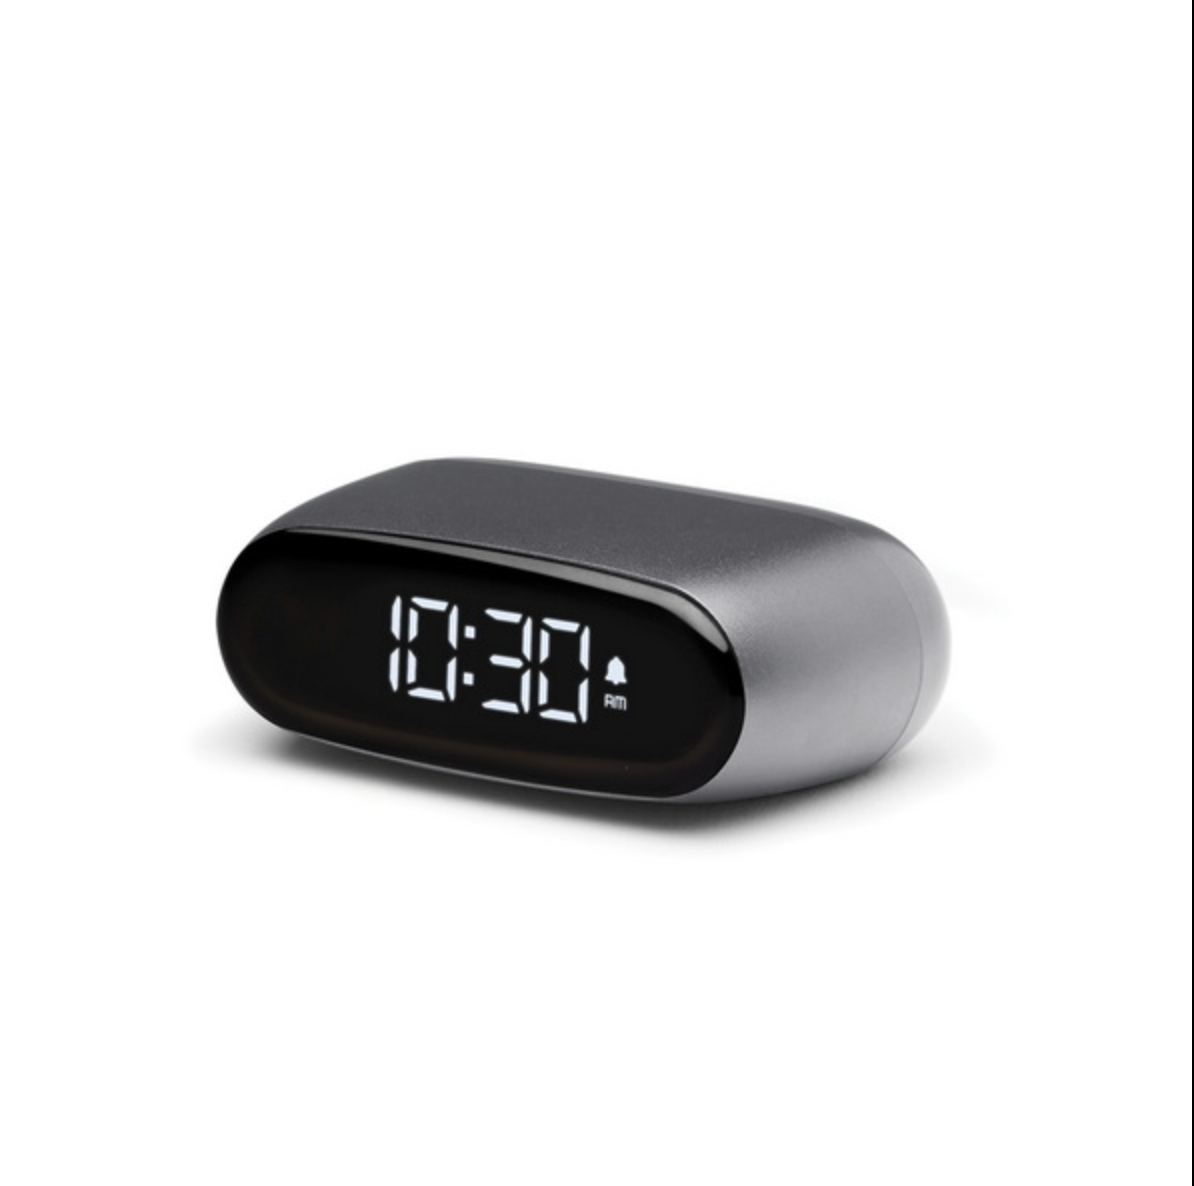 Lexon Minut Mini Alarm Clock - Gunmetal